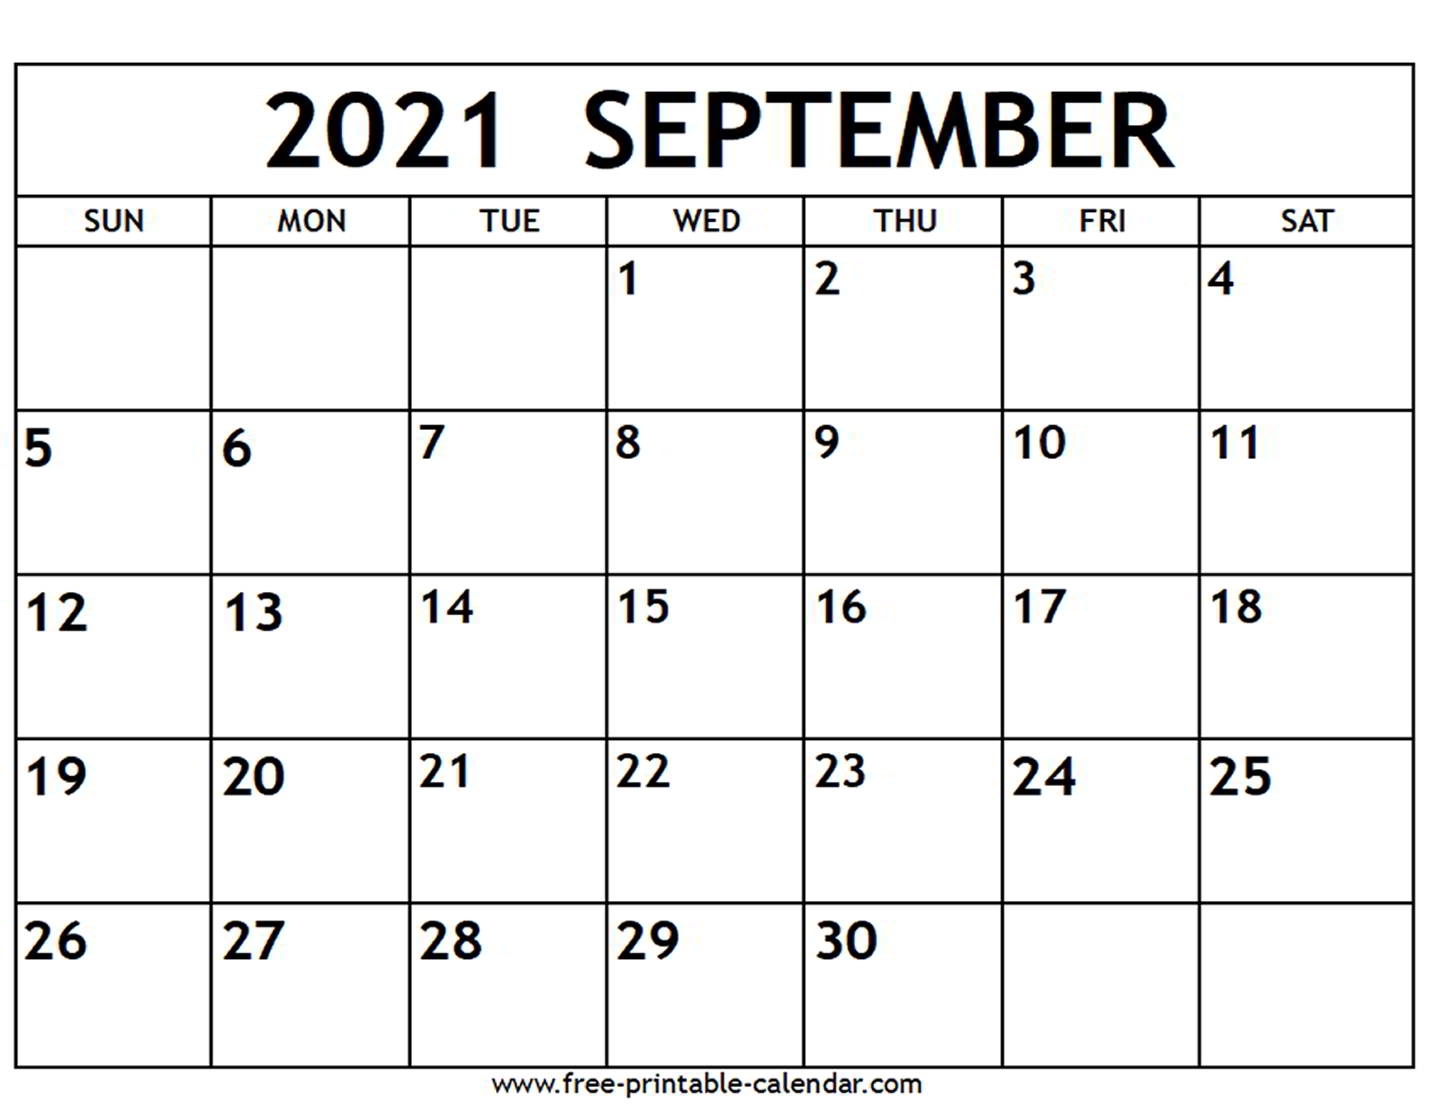 Get Aug Sept Calendar 2021 Printable